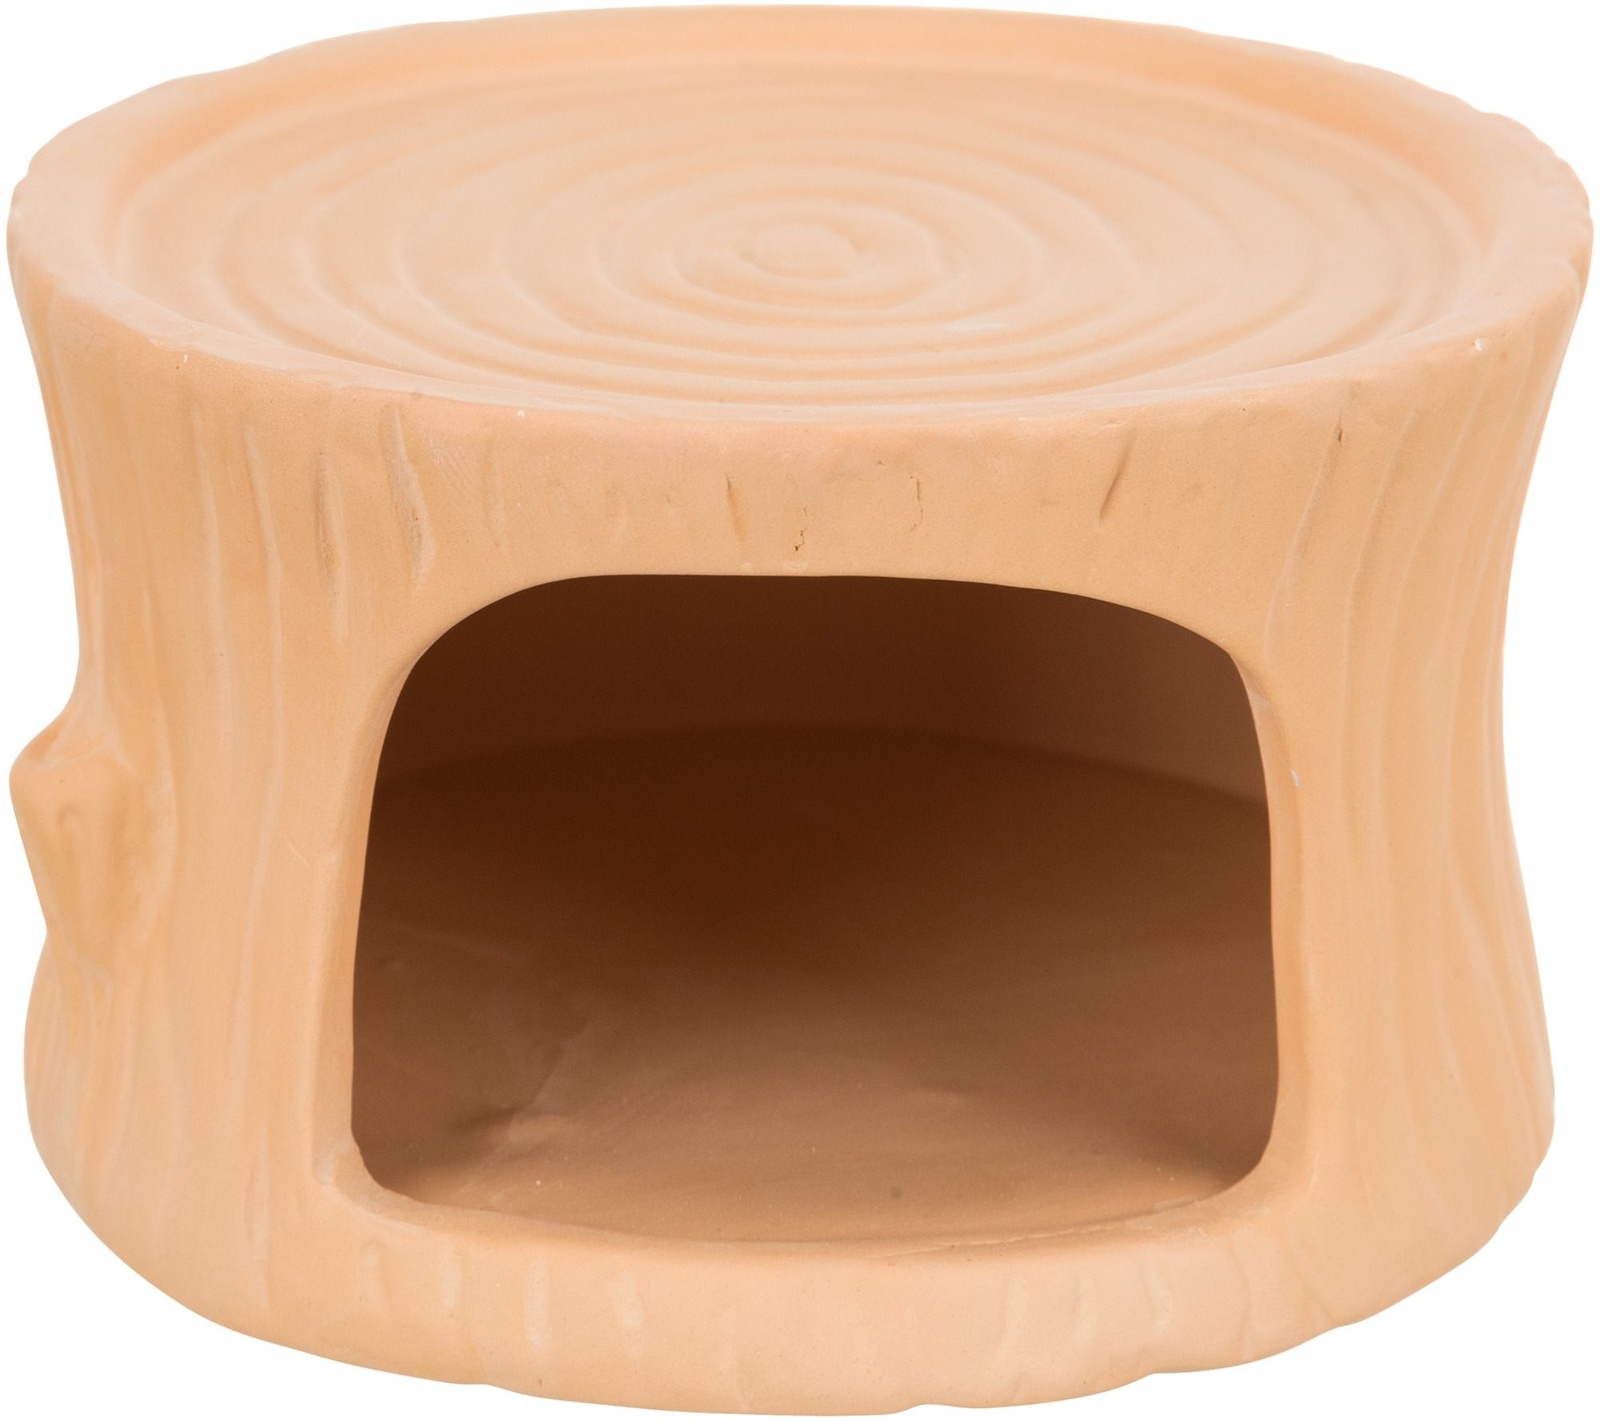 Trixie Trixie домик для мышей и хомяков, керамика, 11 x 6 x 10 см, терракотовый (275 г) trixie домик для хомяков кокос ф 13х56 см